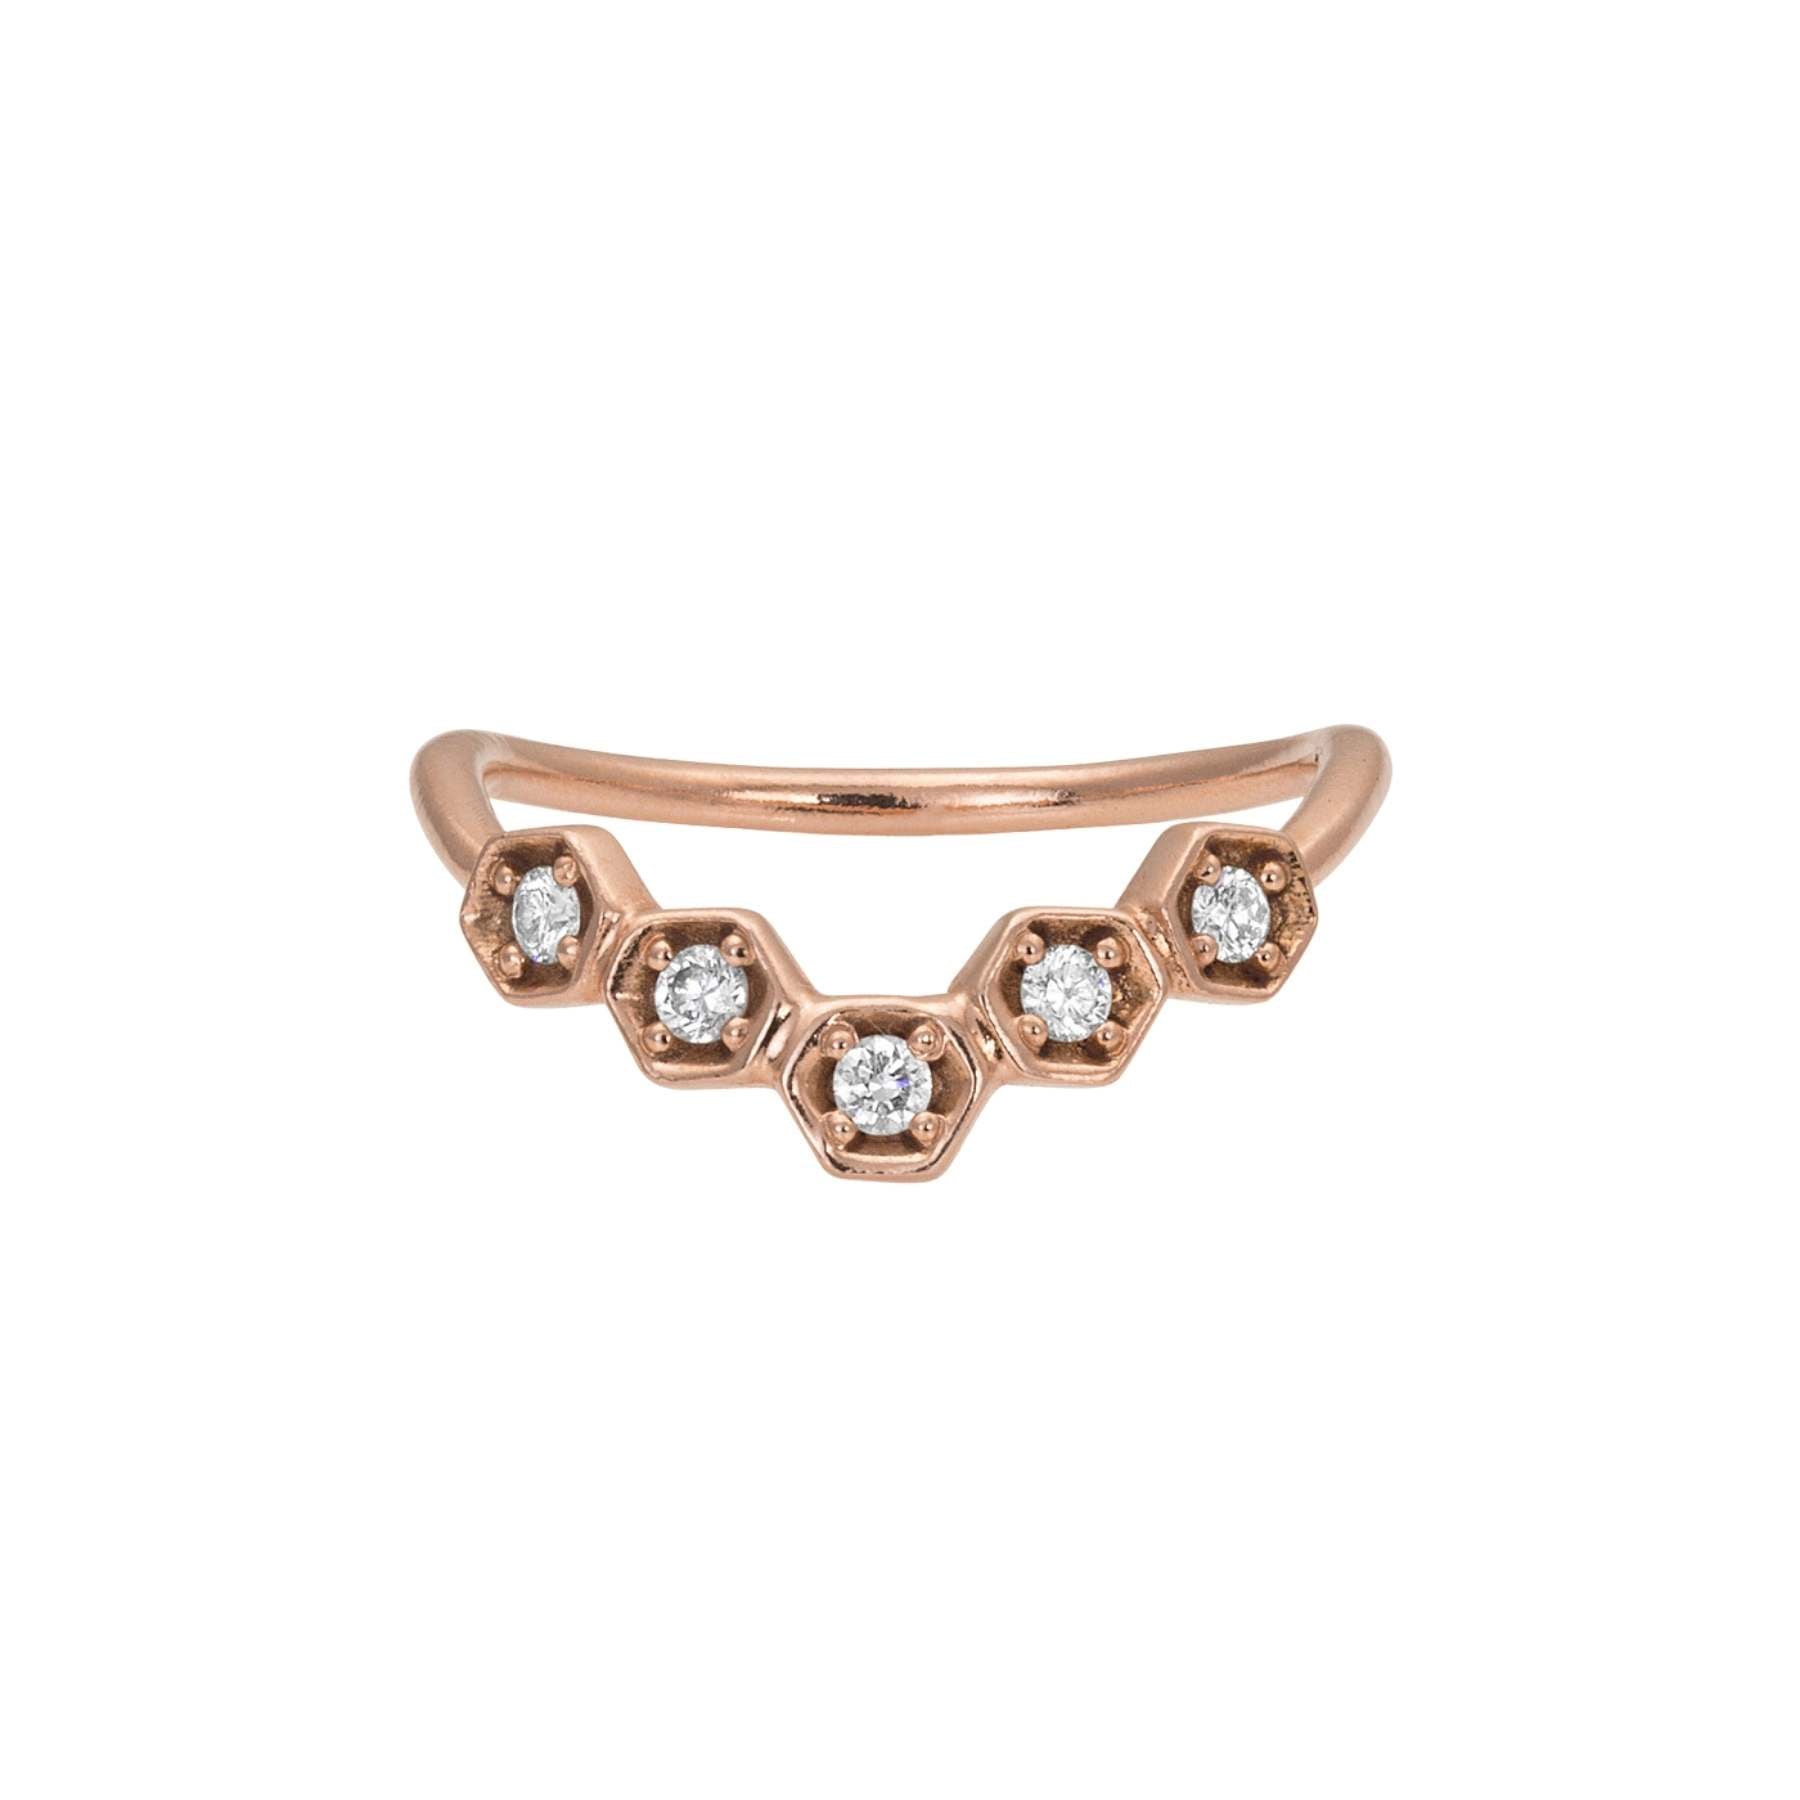 REAV 14k Rose Gold Honeycomb Diamond Ring - Size 7